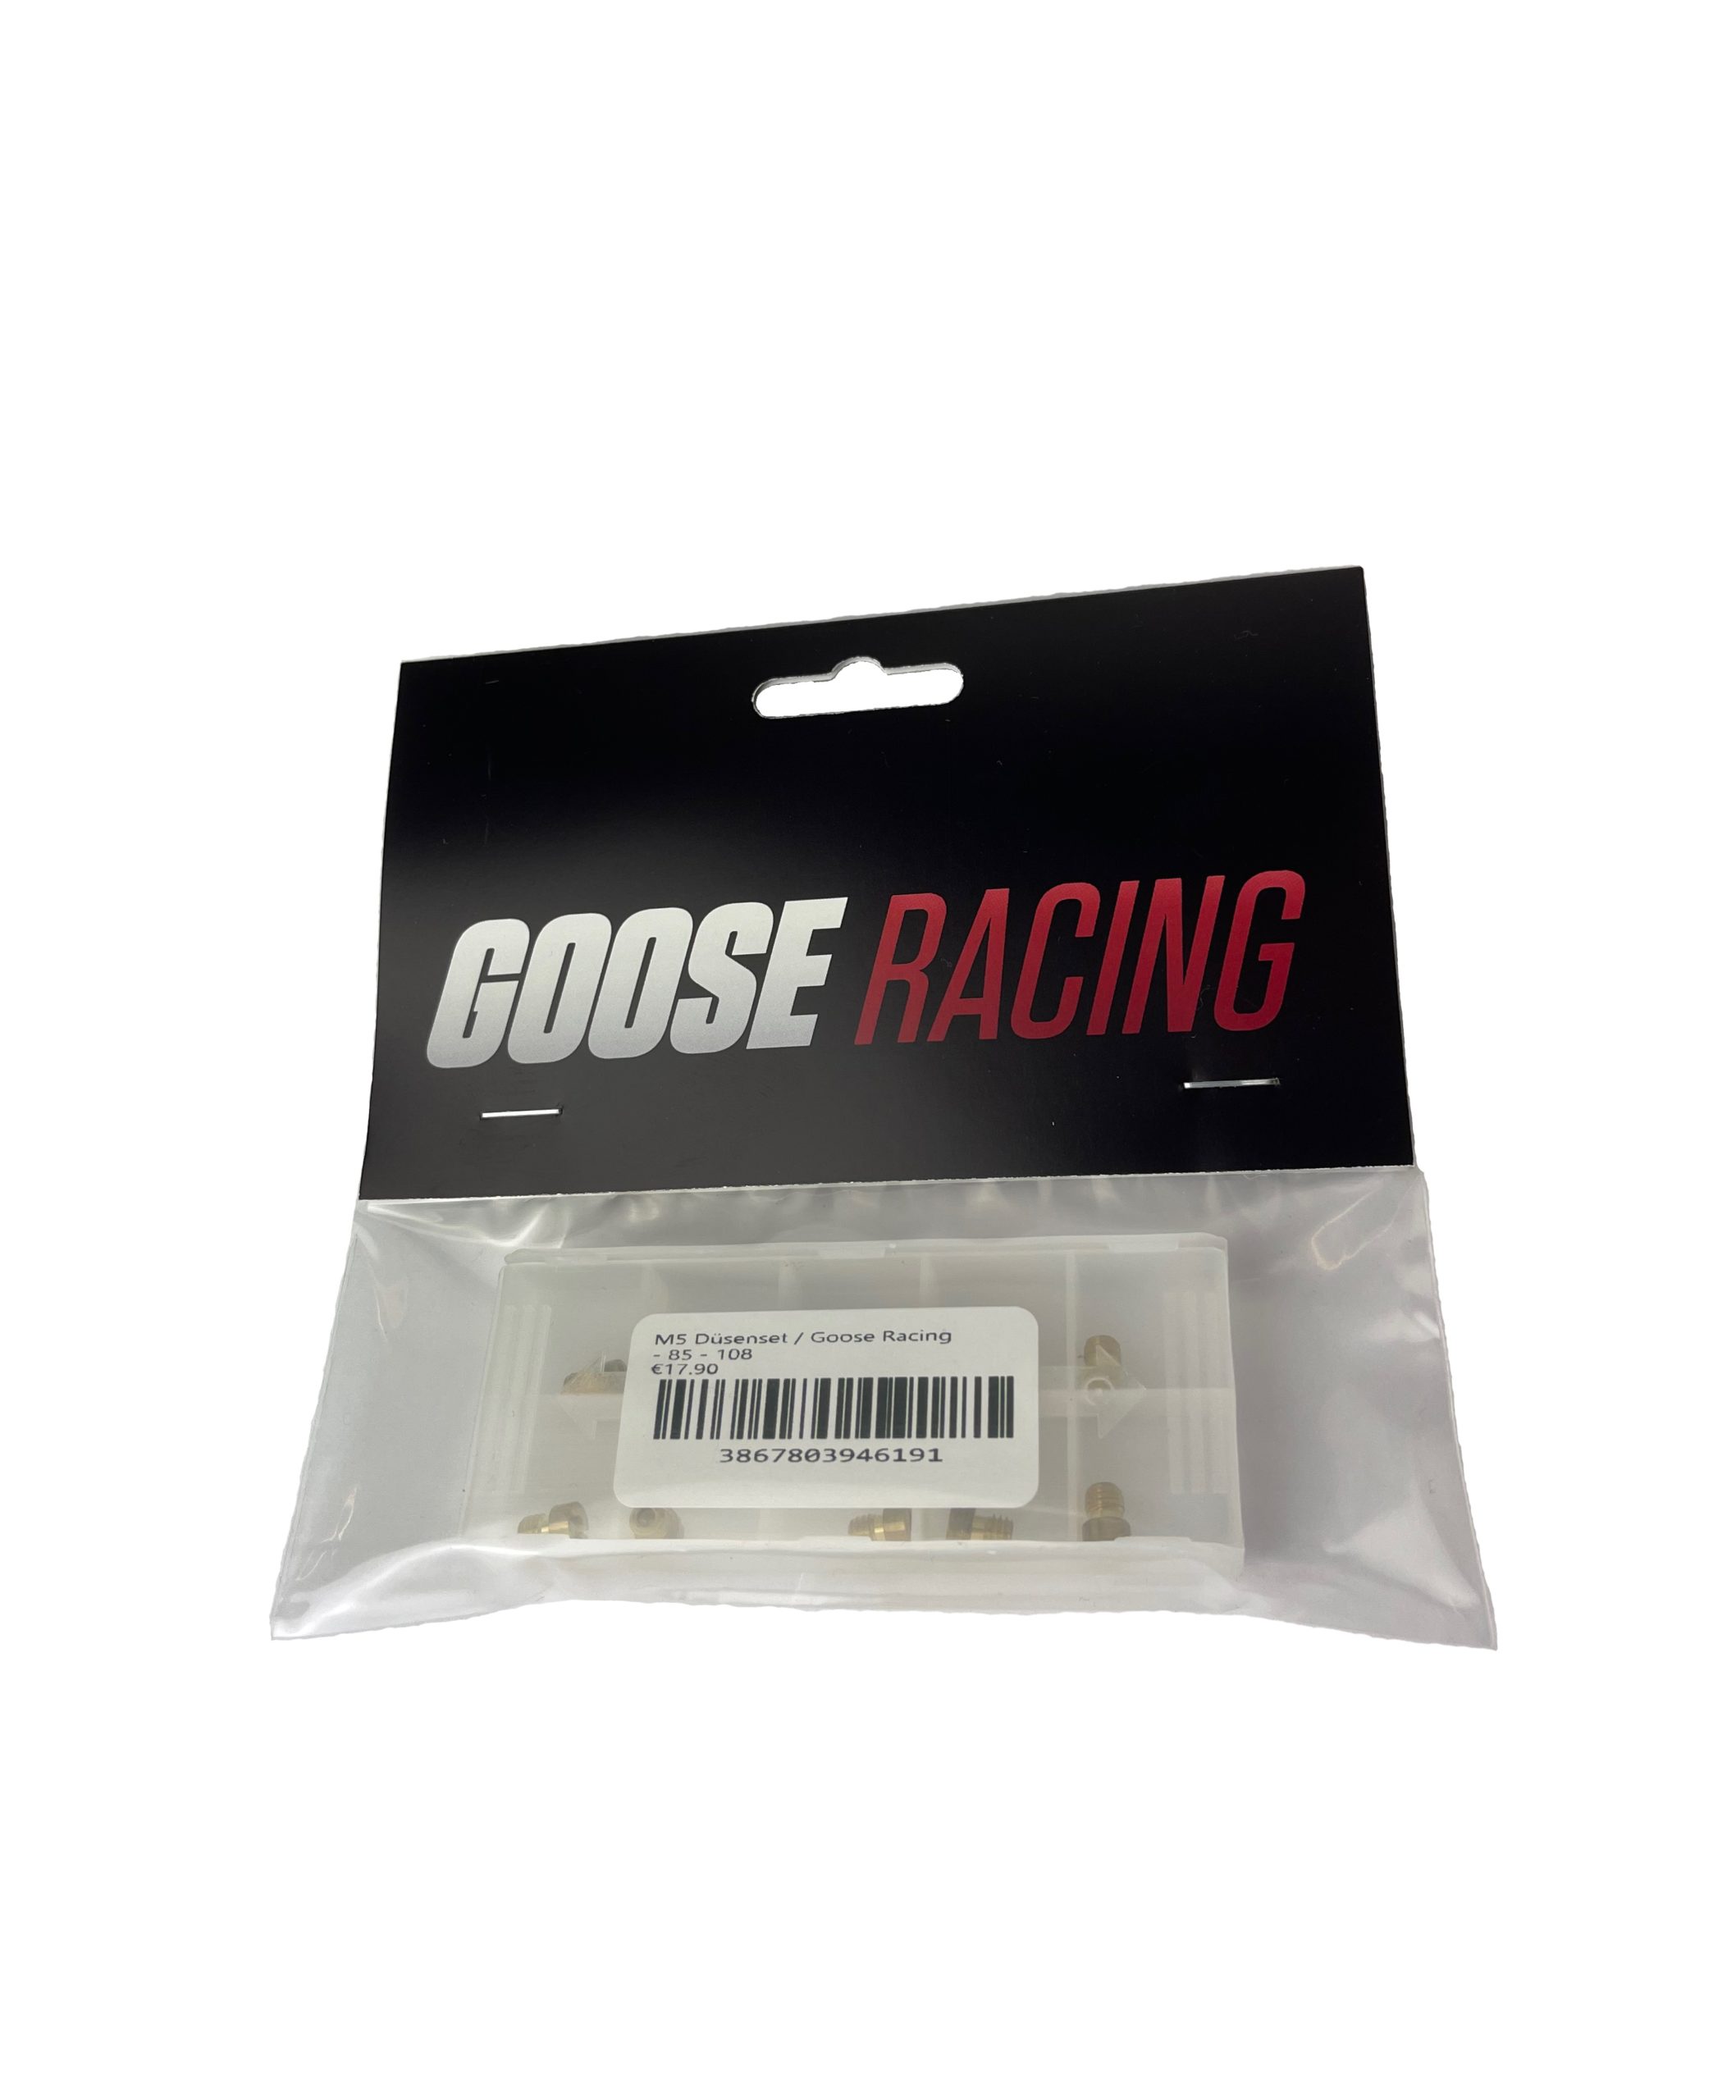 PWK Düsenset / Goose Racing